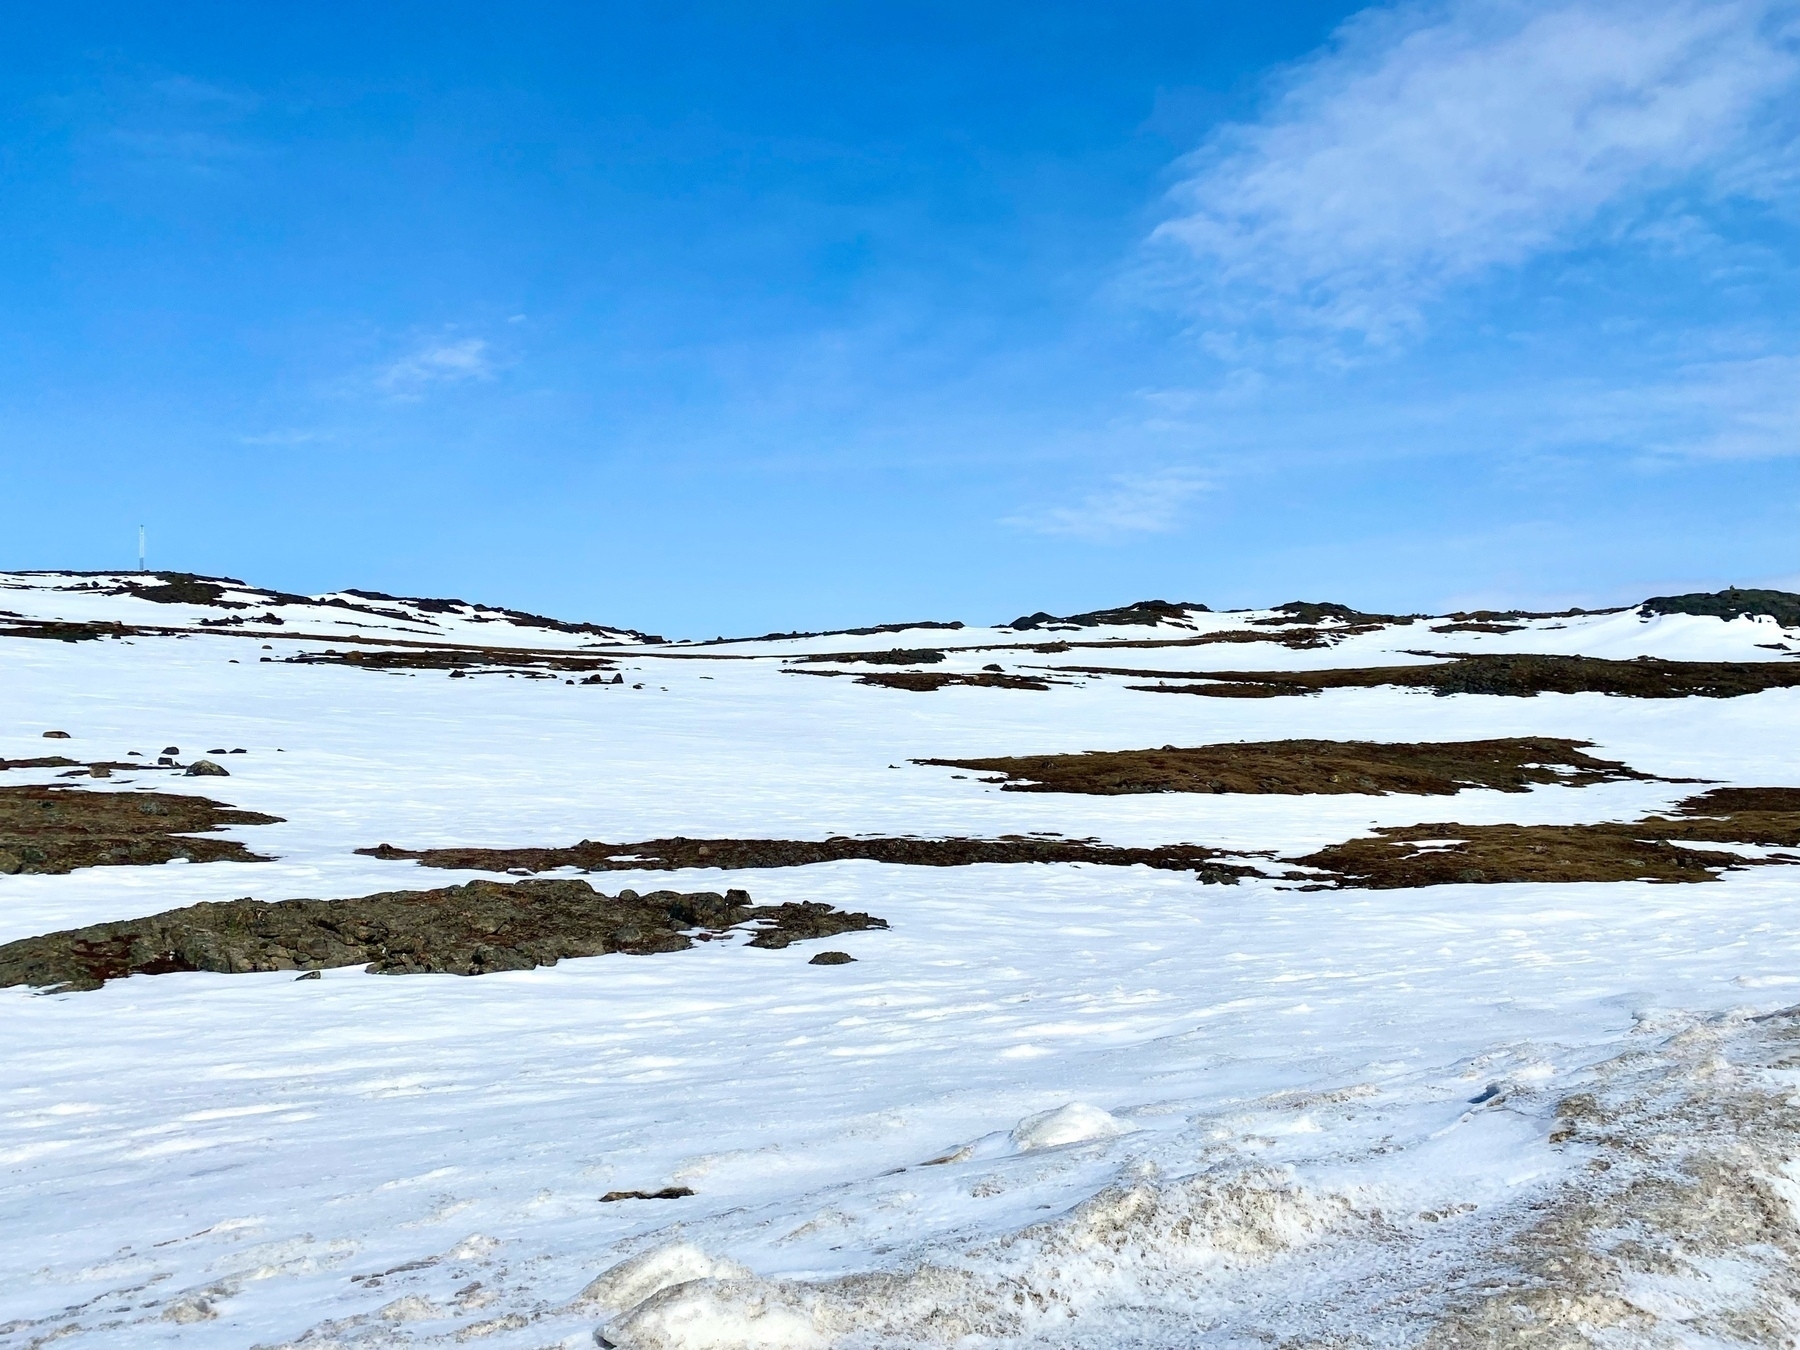 snow-covered hillside under blue sky